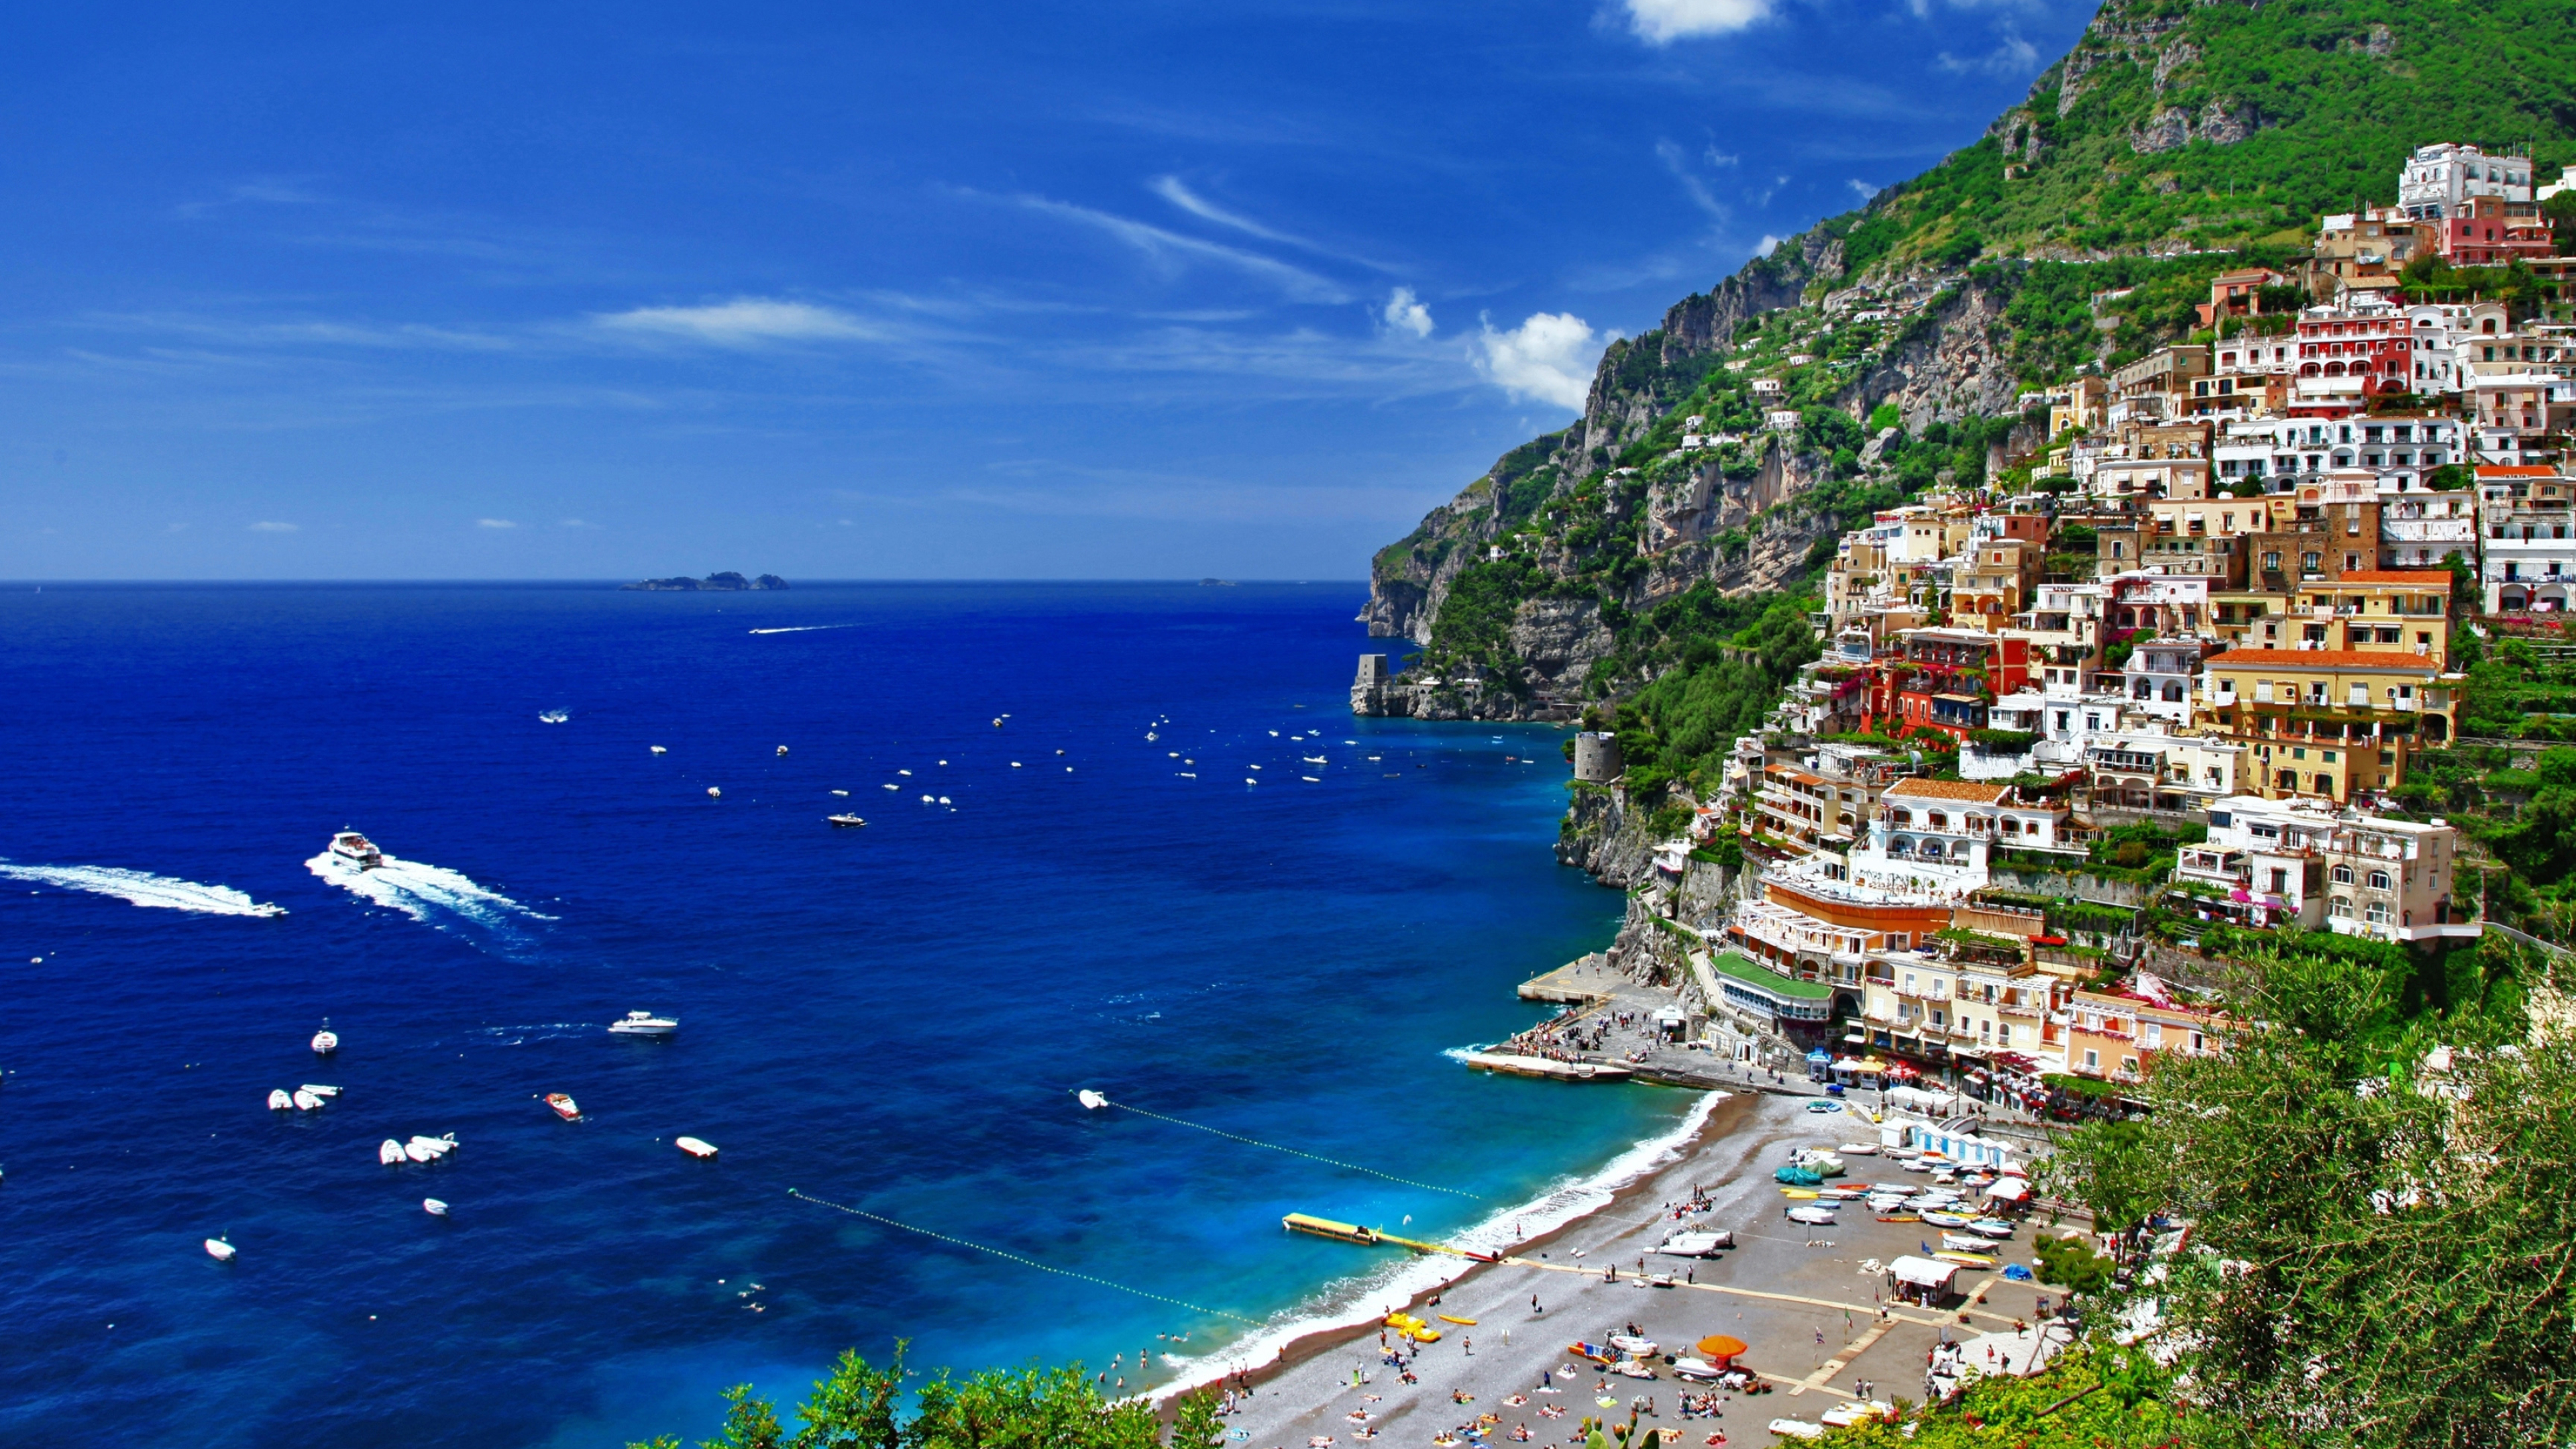 Skyline: The Amalfi Coast, The blue water Tyrrhenian Sea and the Gulf of Salerno, Southern Italy. 3840x2160 4K Wallpaper.